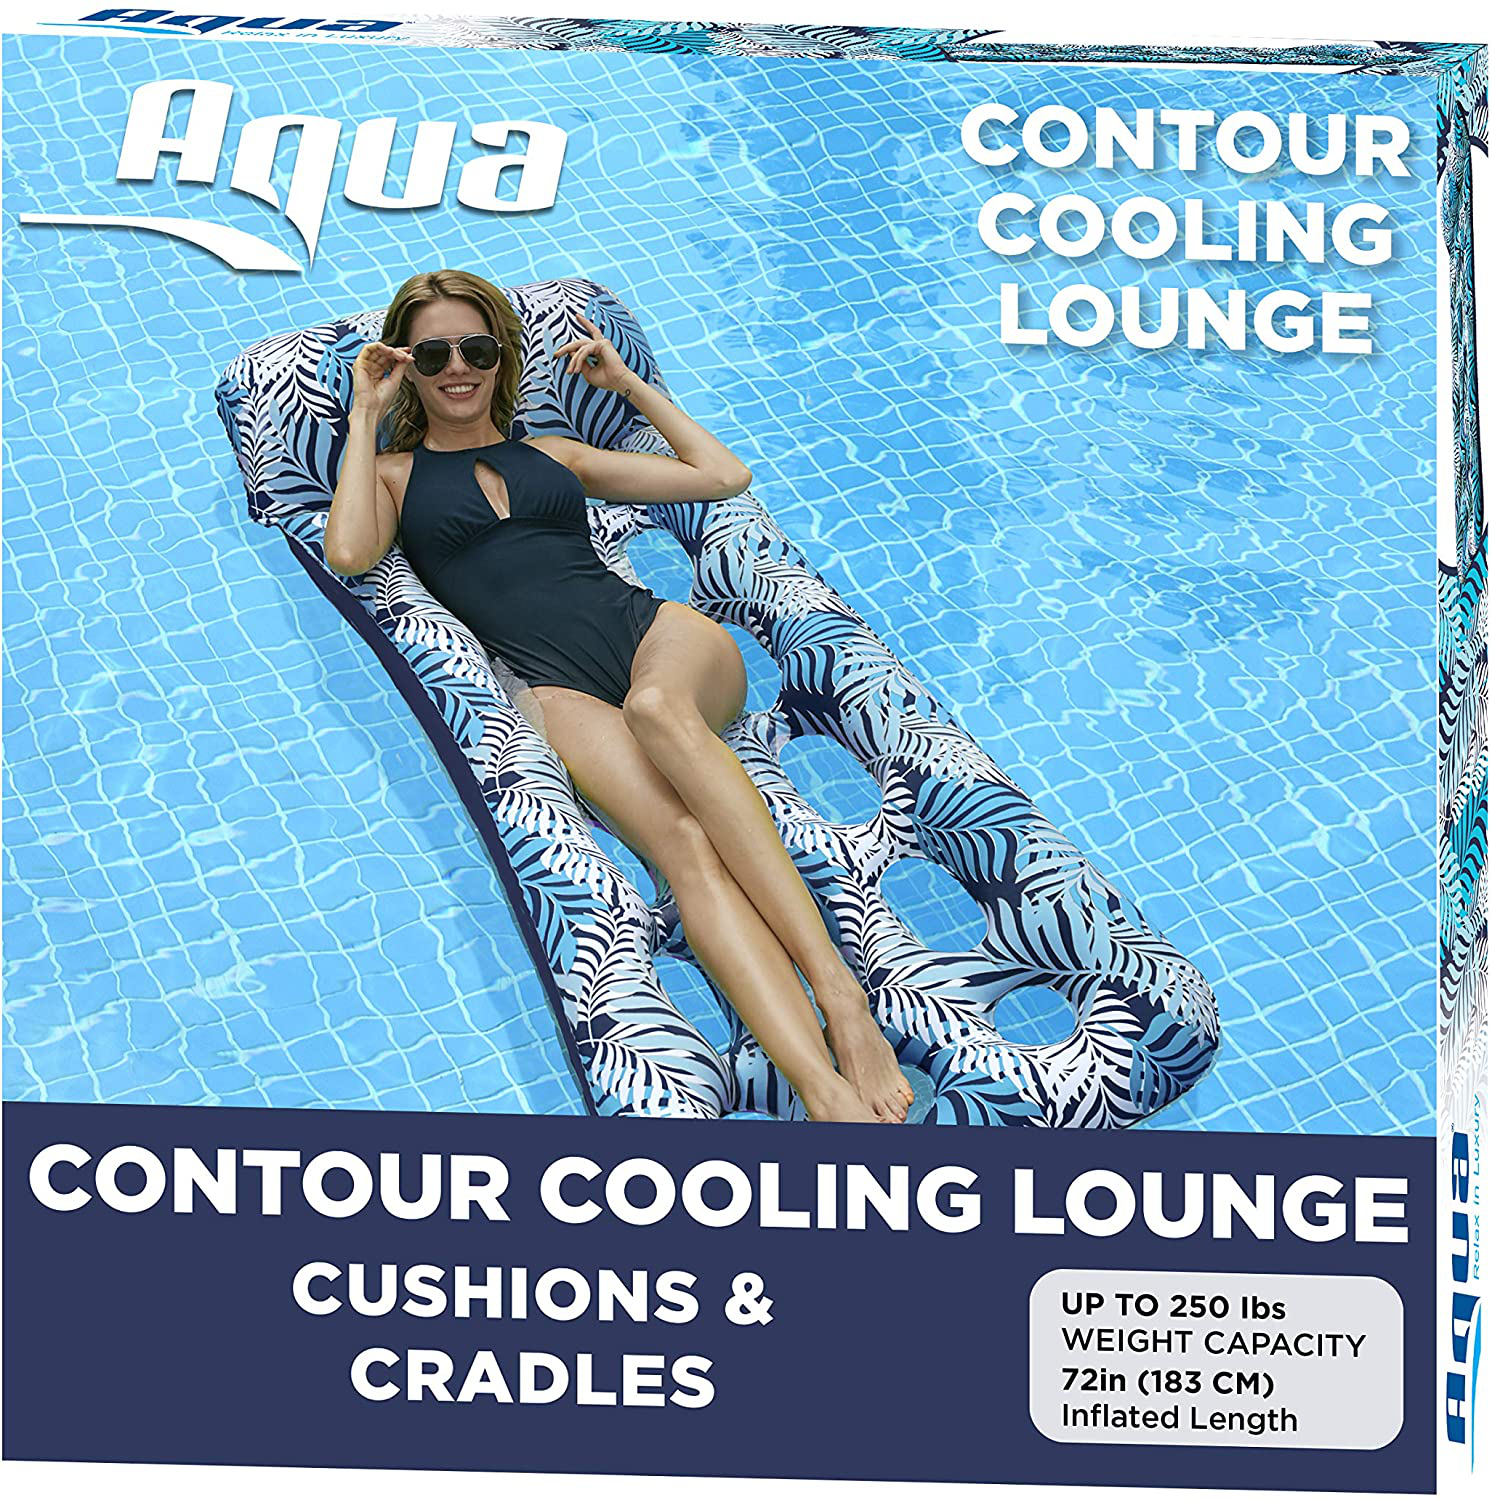 AQUA Zero Gravity Pool Chair Lounge, Inflatable Pool Chair, Adult Pool Float, Heavy Duty, Teal Fern, Blue Teal - Zero G Pool Chair (AZL17290TL)